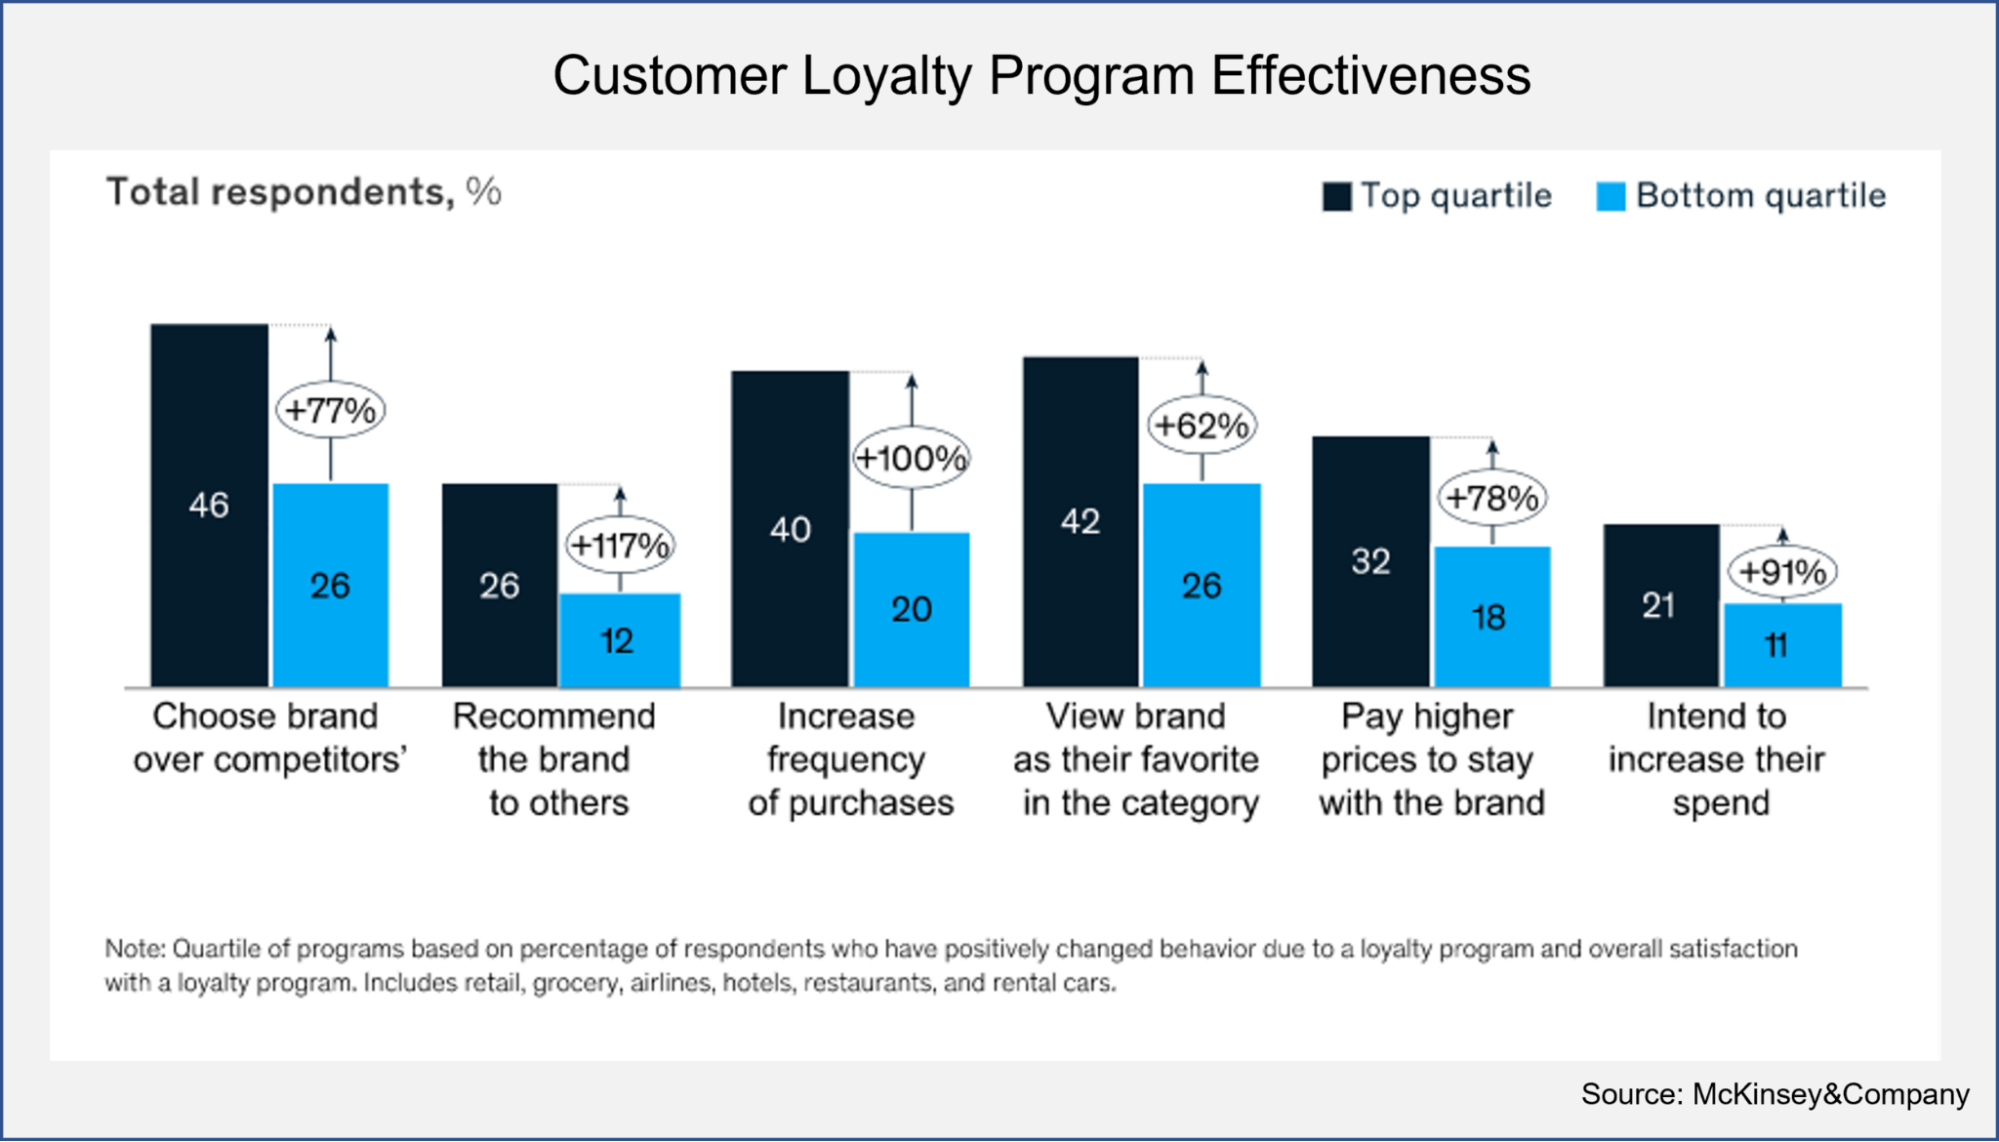 Effectiveness of customer loyalty programs